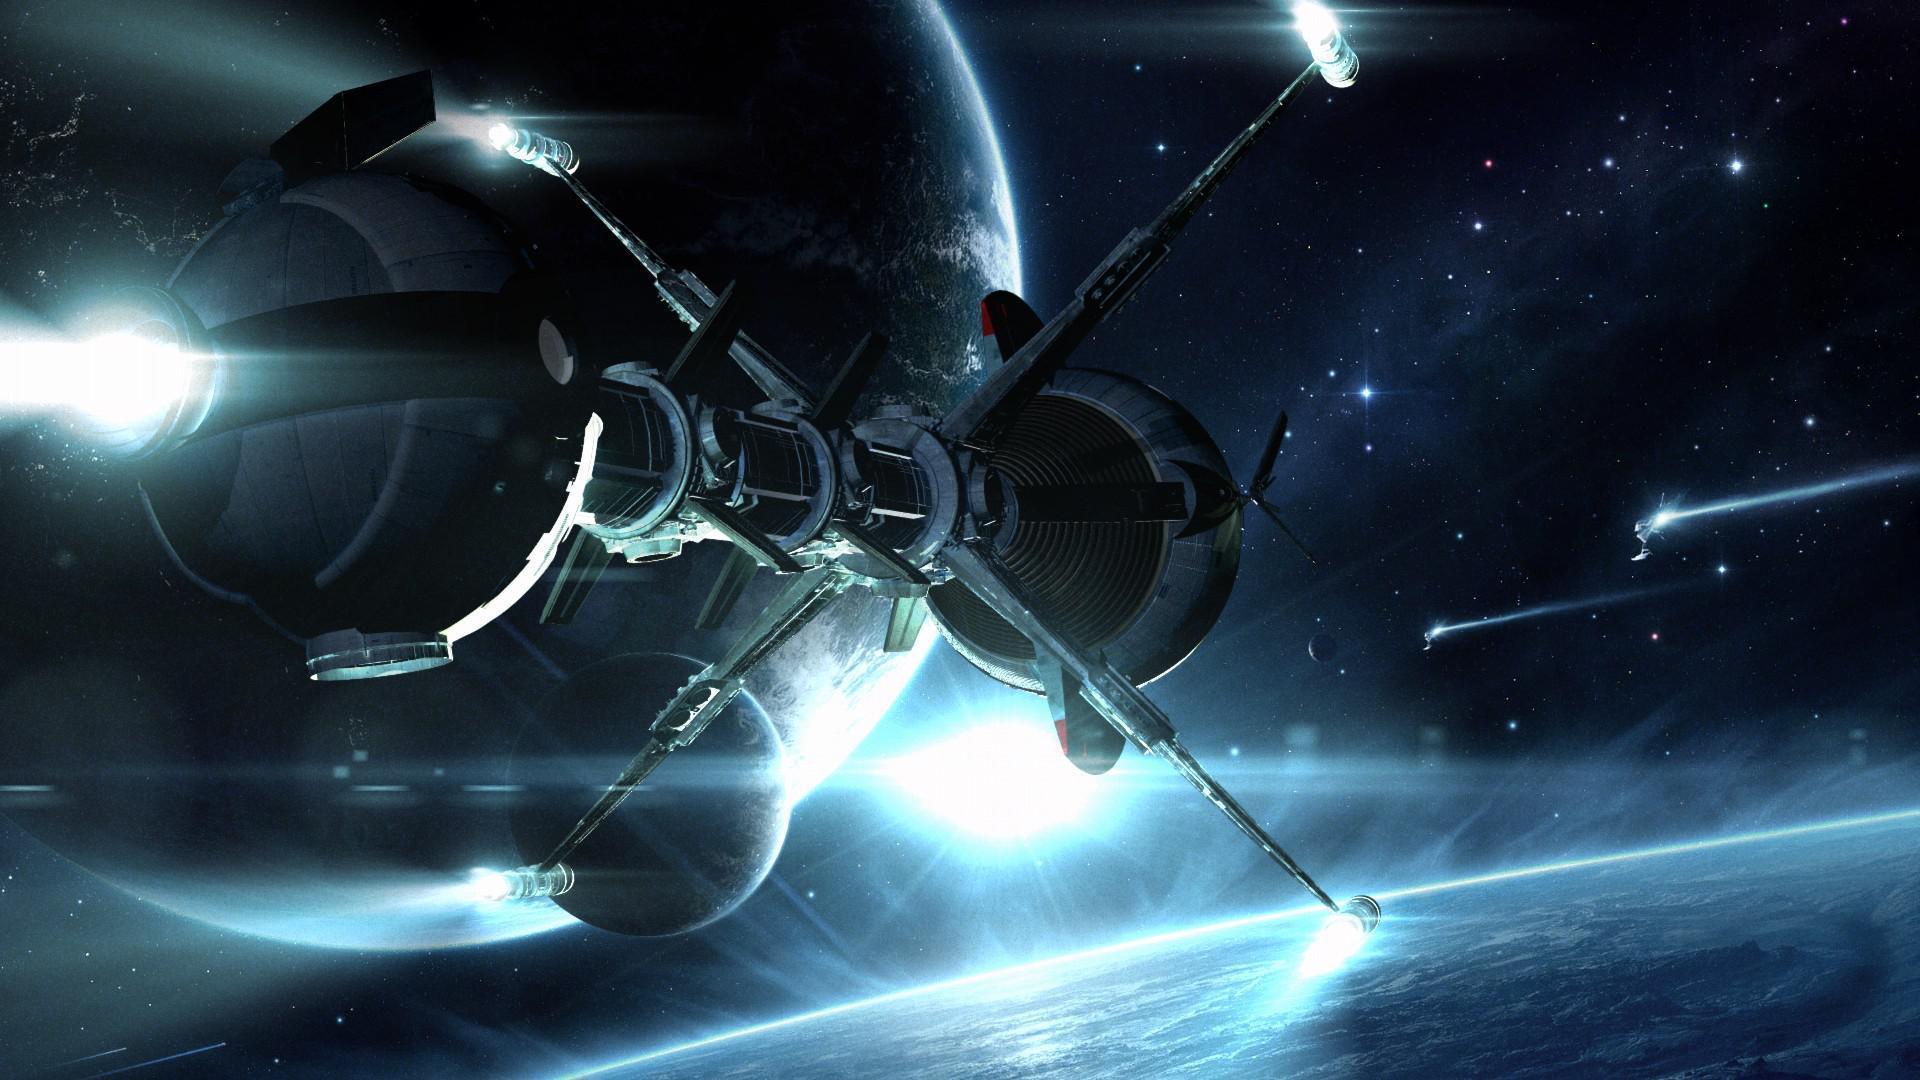 HD Sci Fi Spacecraft Spaceship Planets Stars Art Image Download